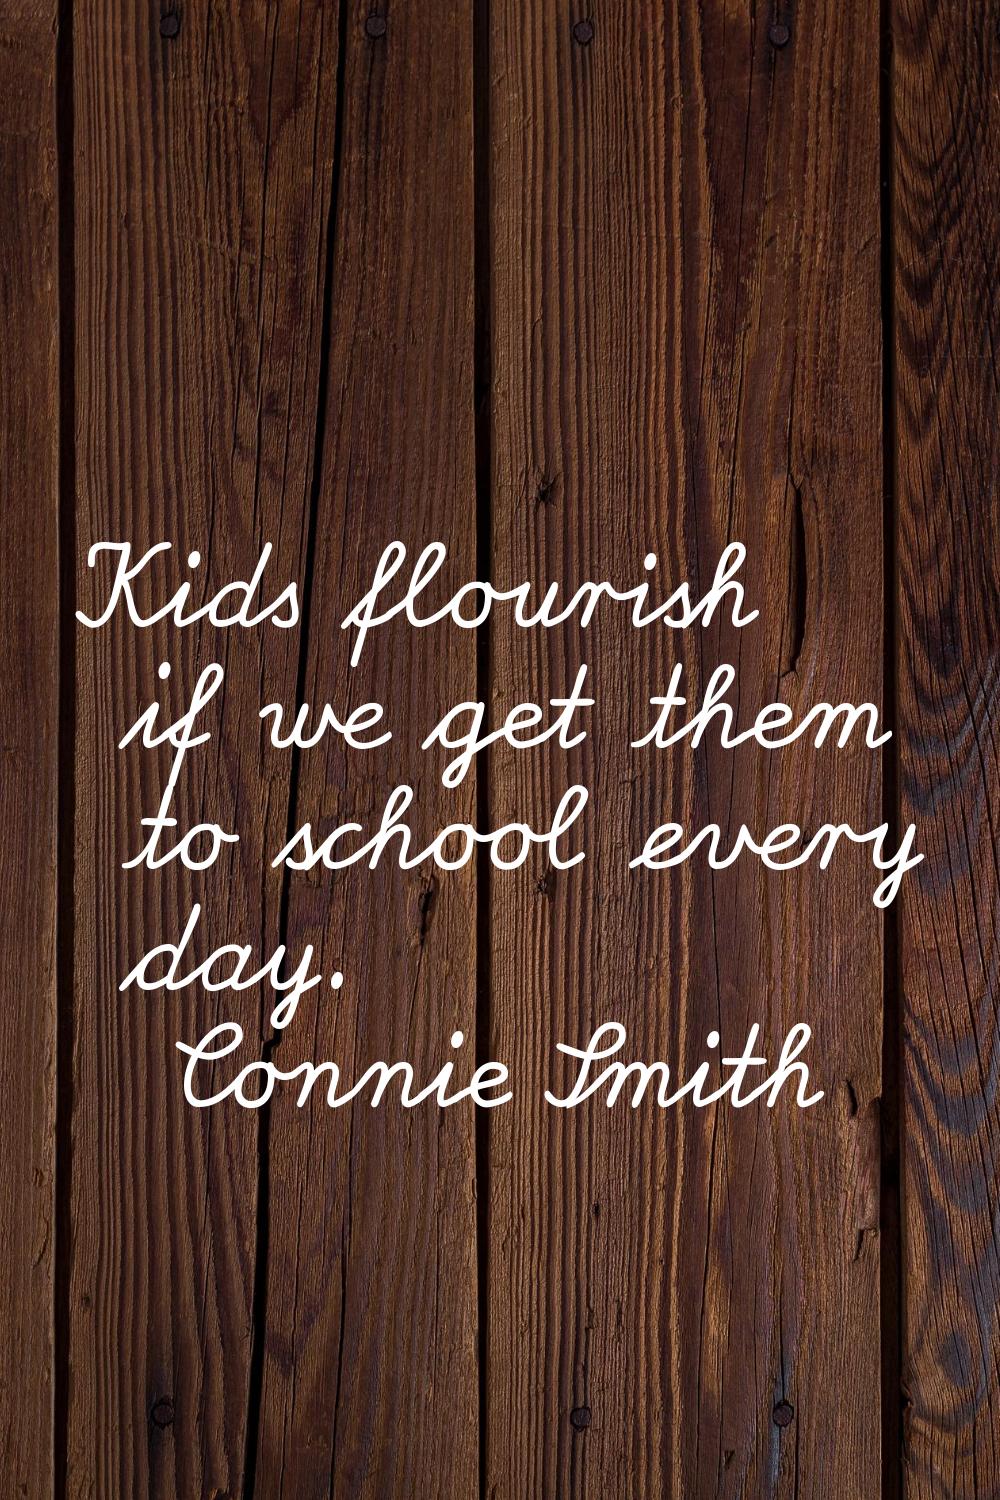 Kids flourish if we get them to school every day.